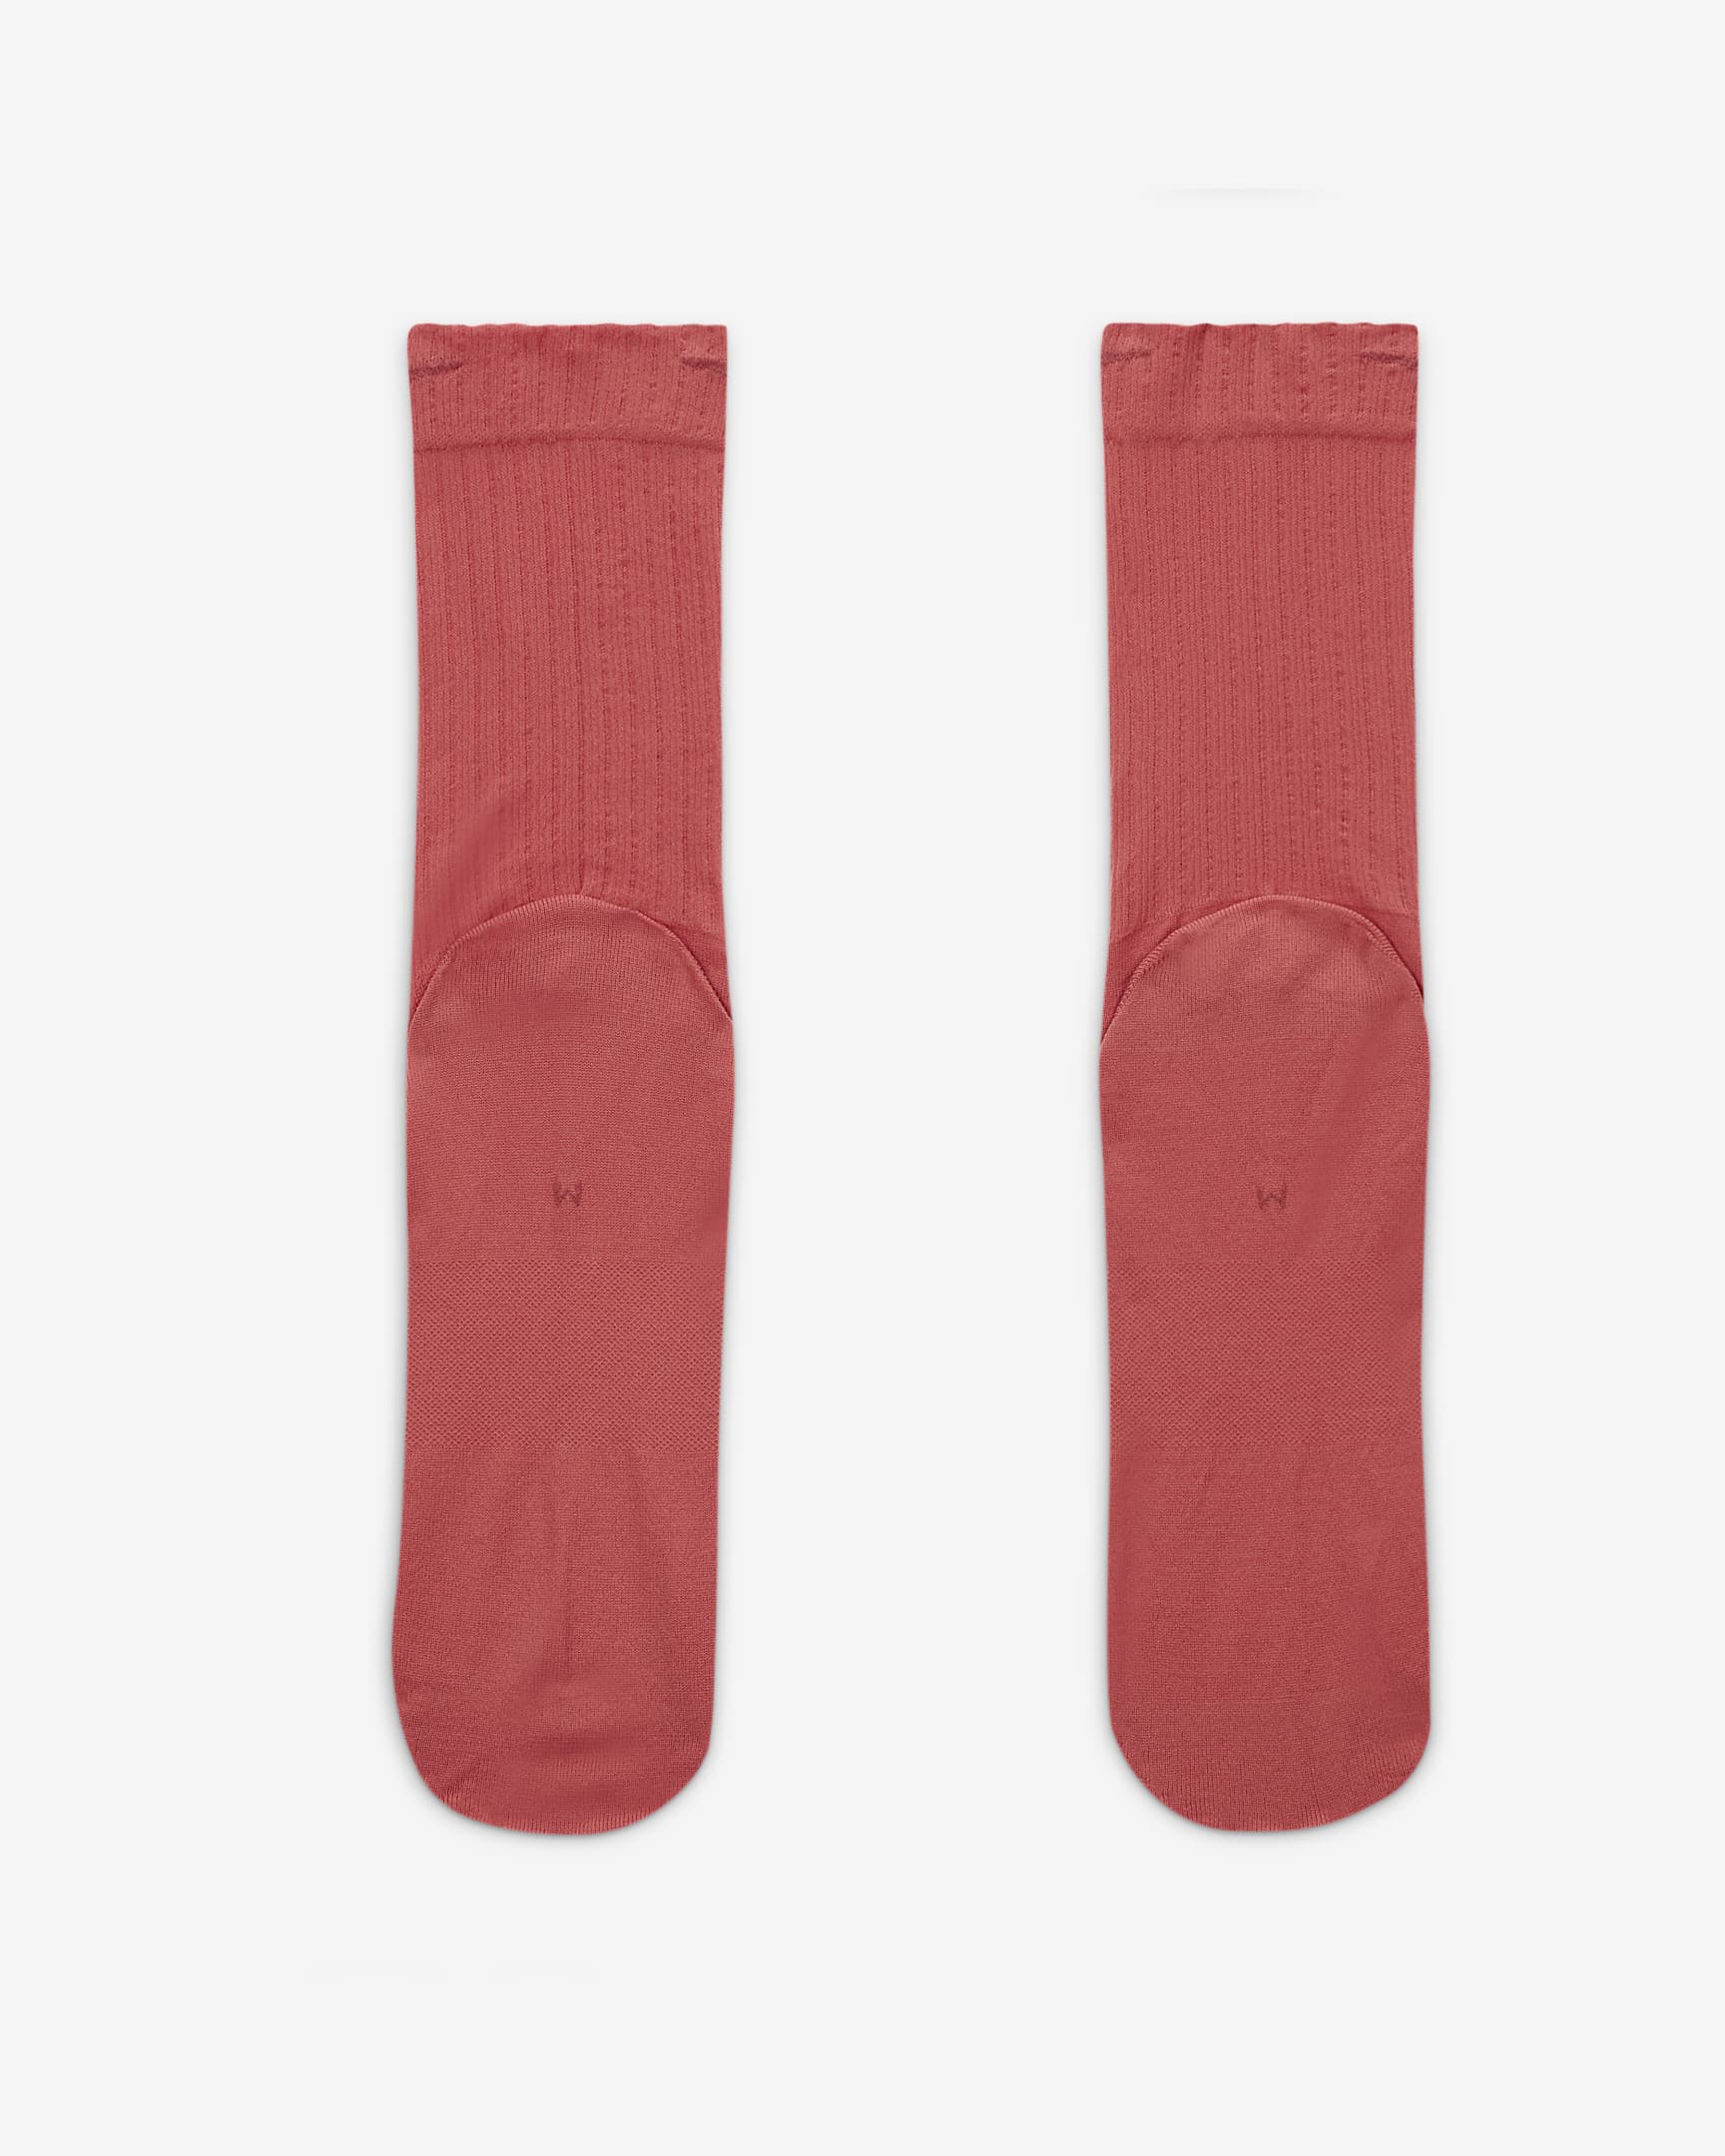 Nike Women's Sheer Crew Socks (1 Pair) - Adobe/Cedar